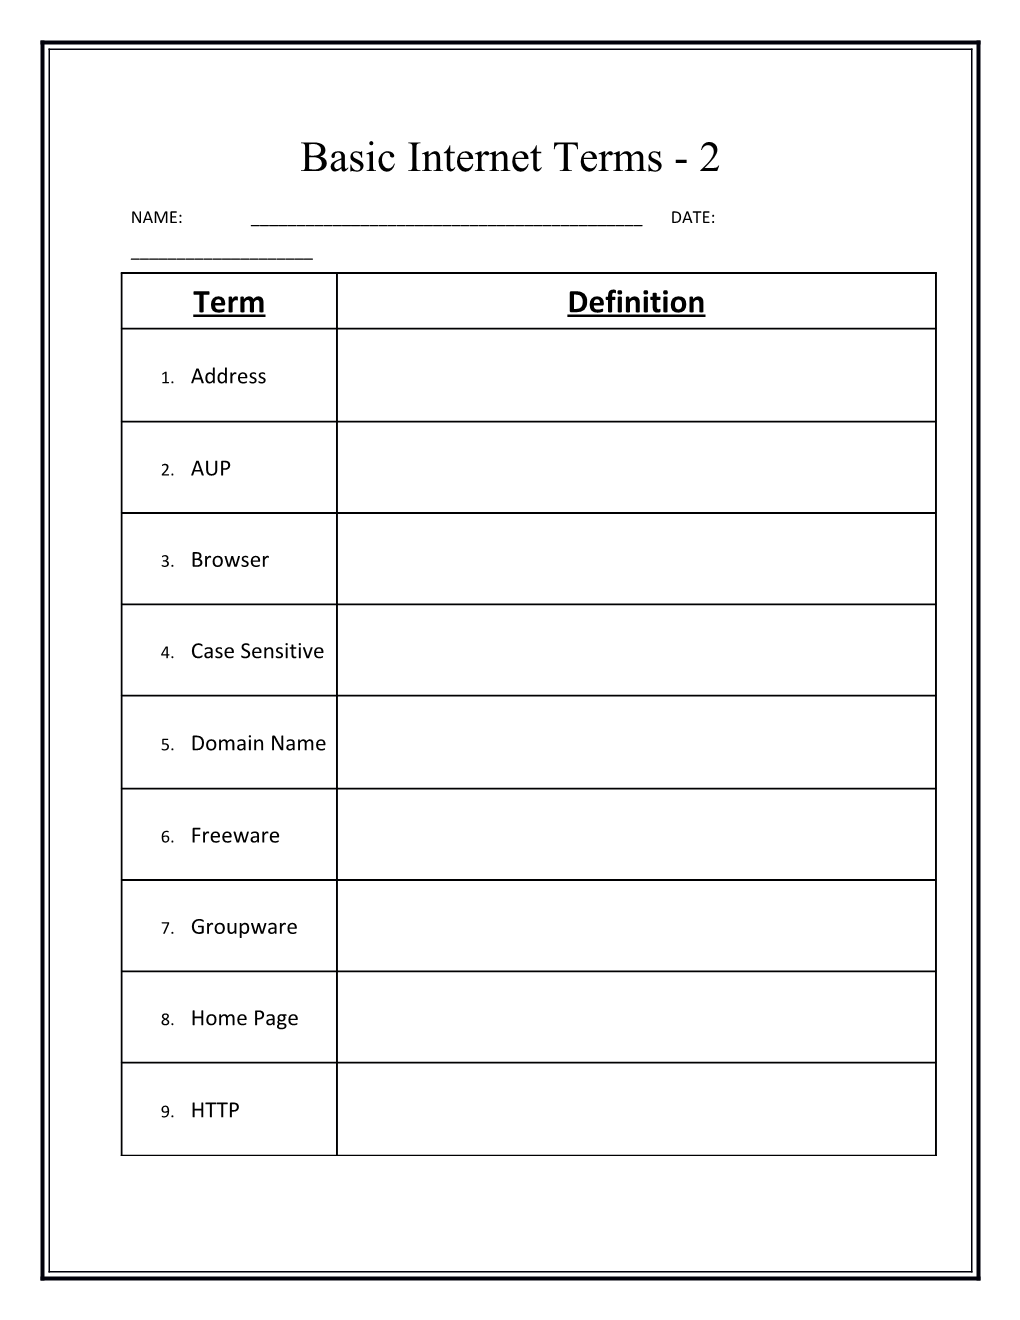 Basic Internet Terms - 2